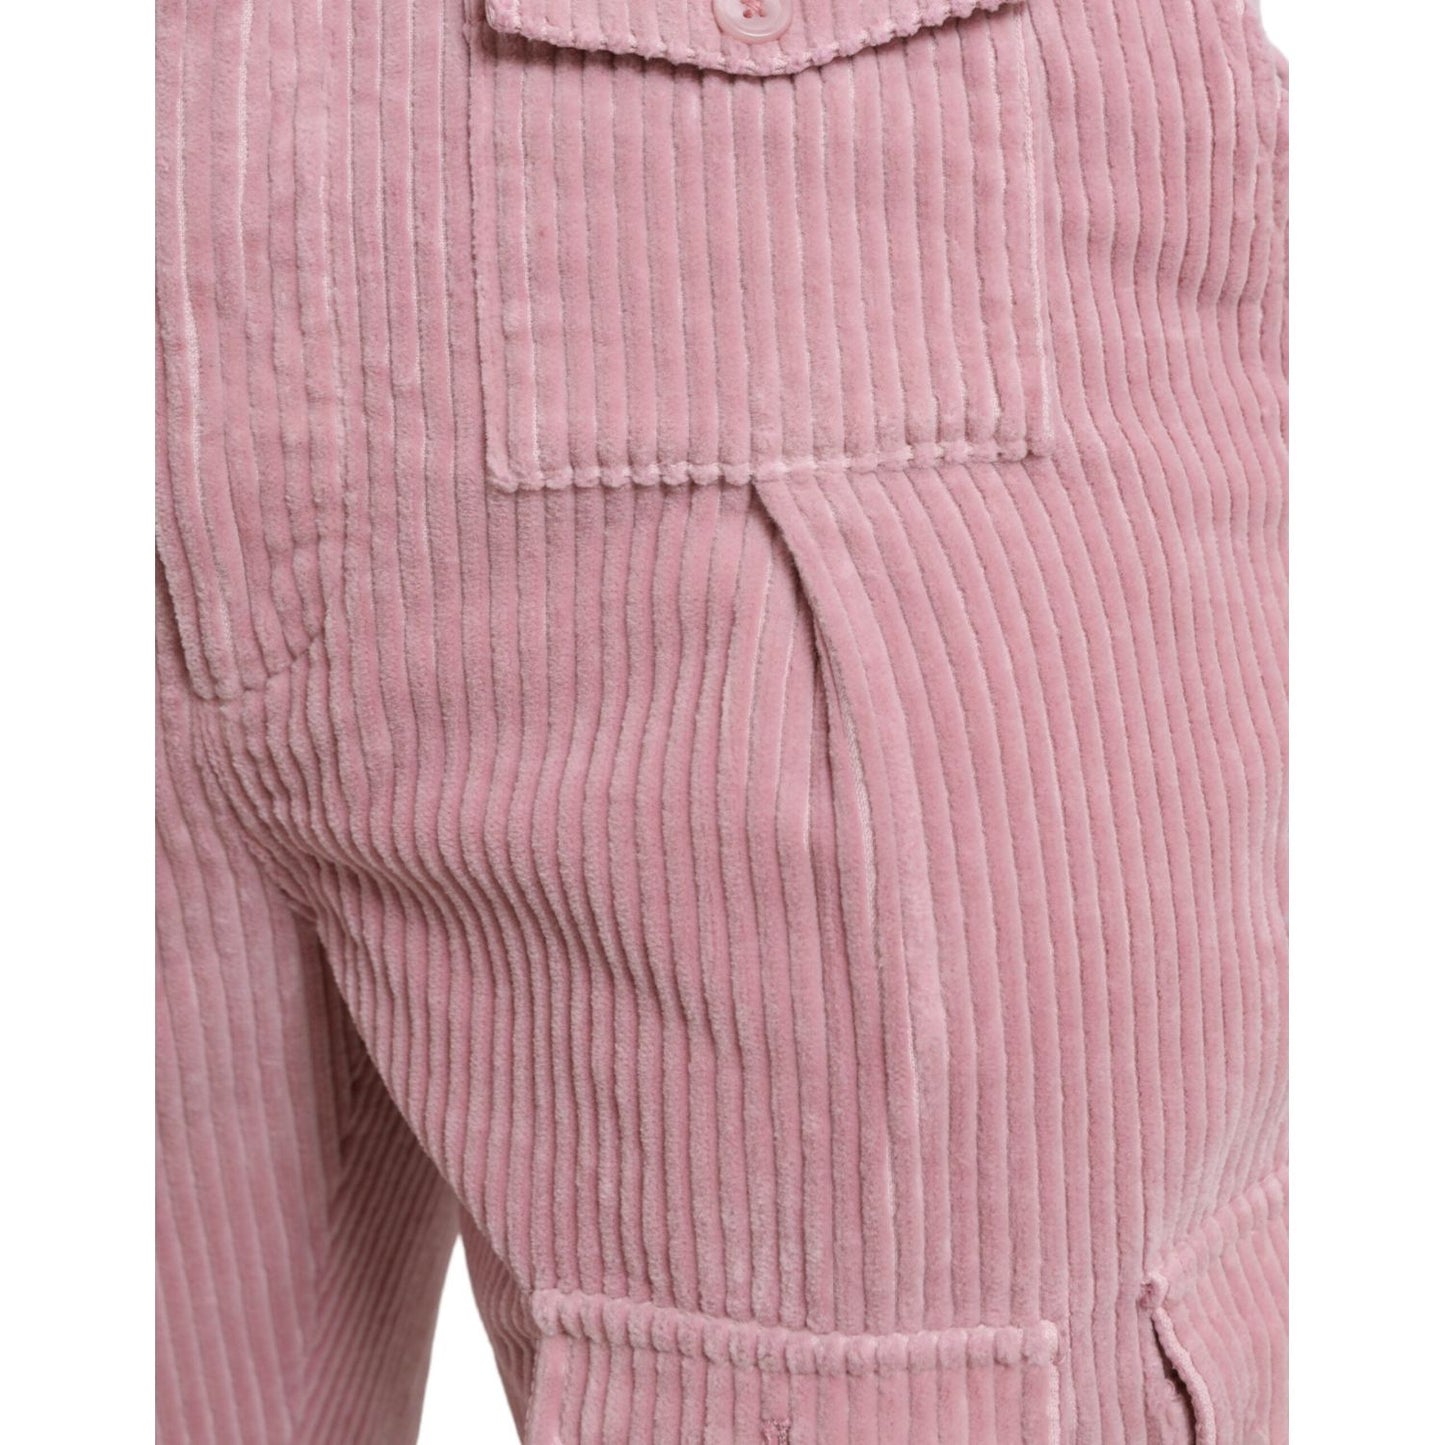 Dolce & Gabbana Pink Corduroy Cotton Stretch Skinny Cargo Jeans pink-corduroy-cotton-stretch-skinny-cargo-jeans